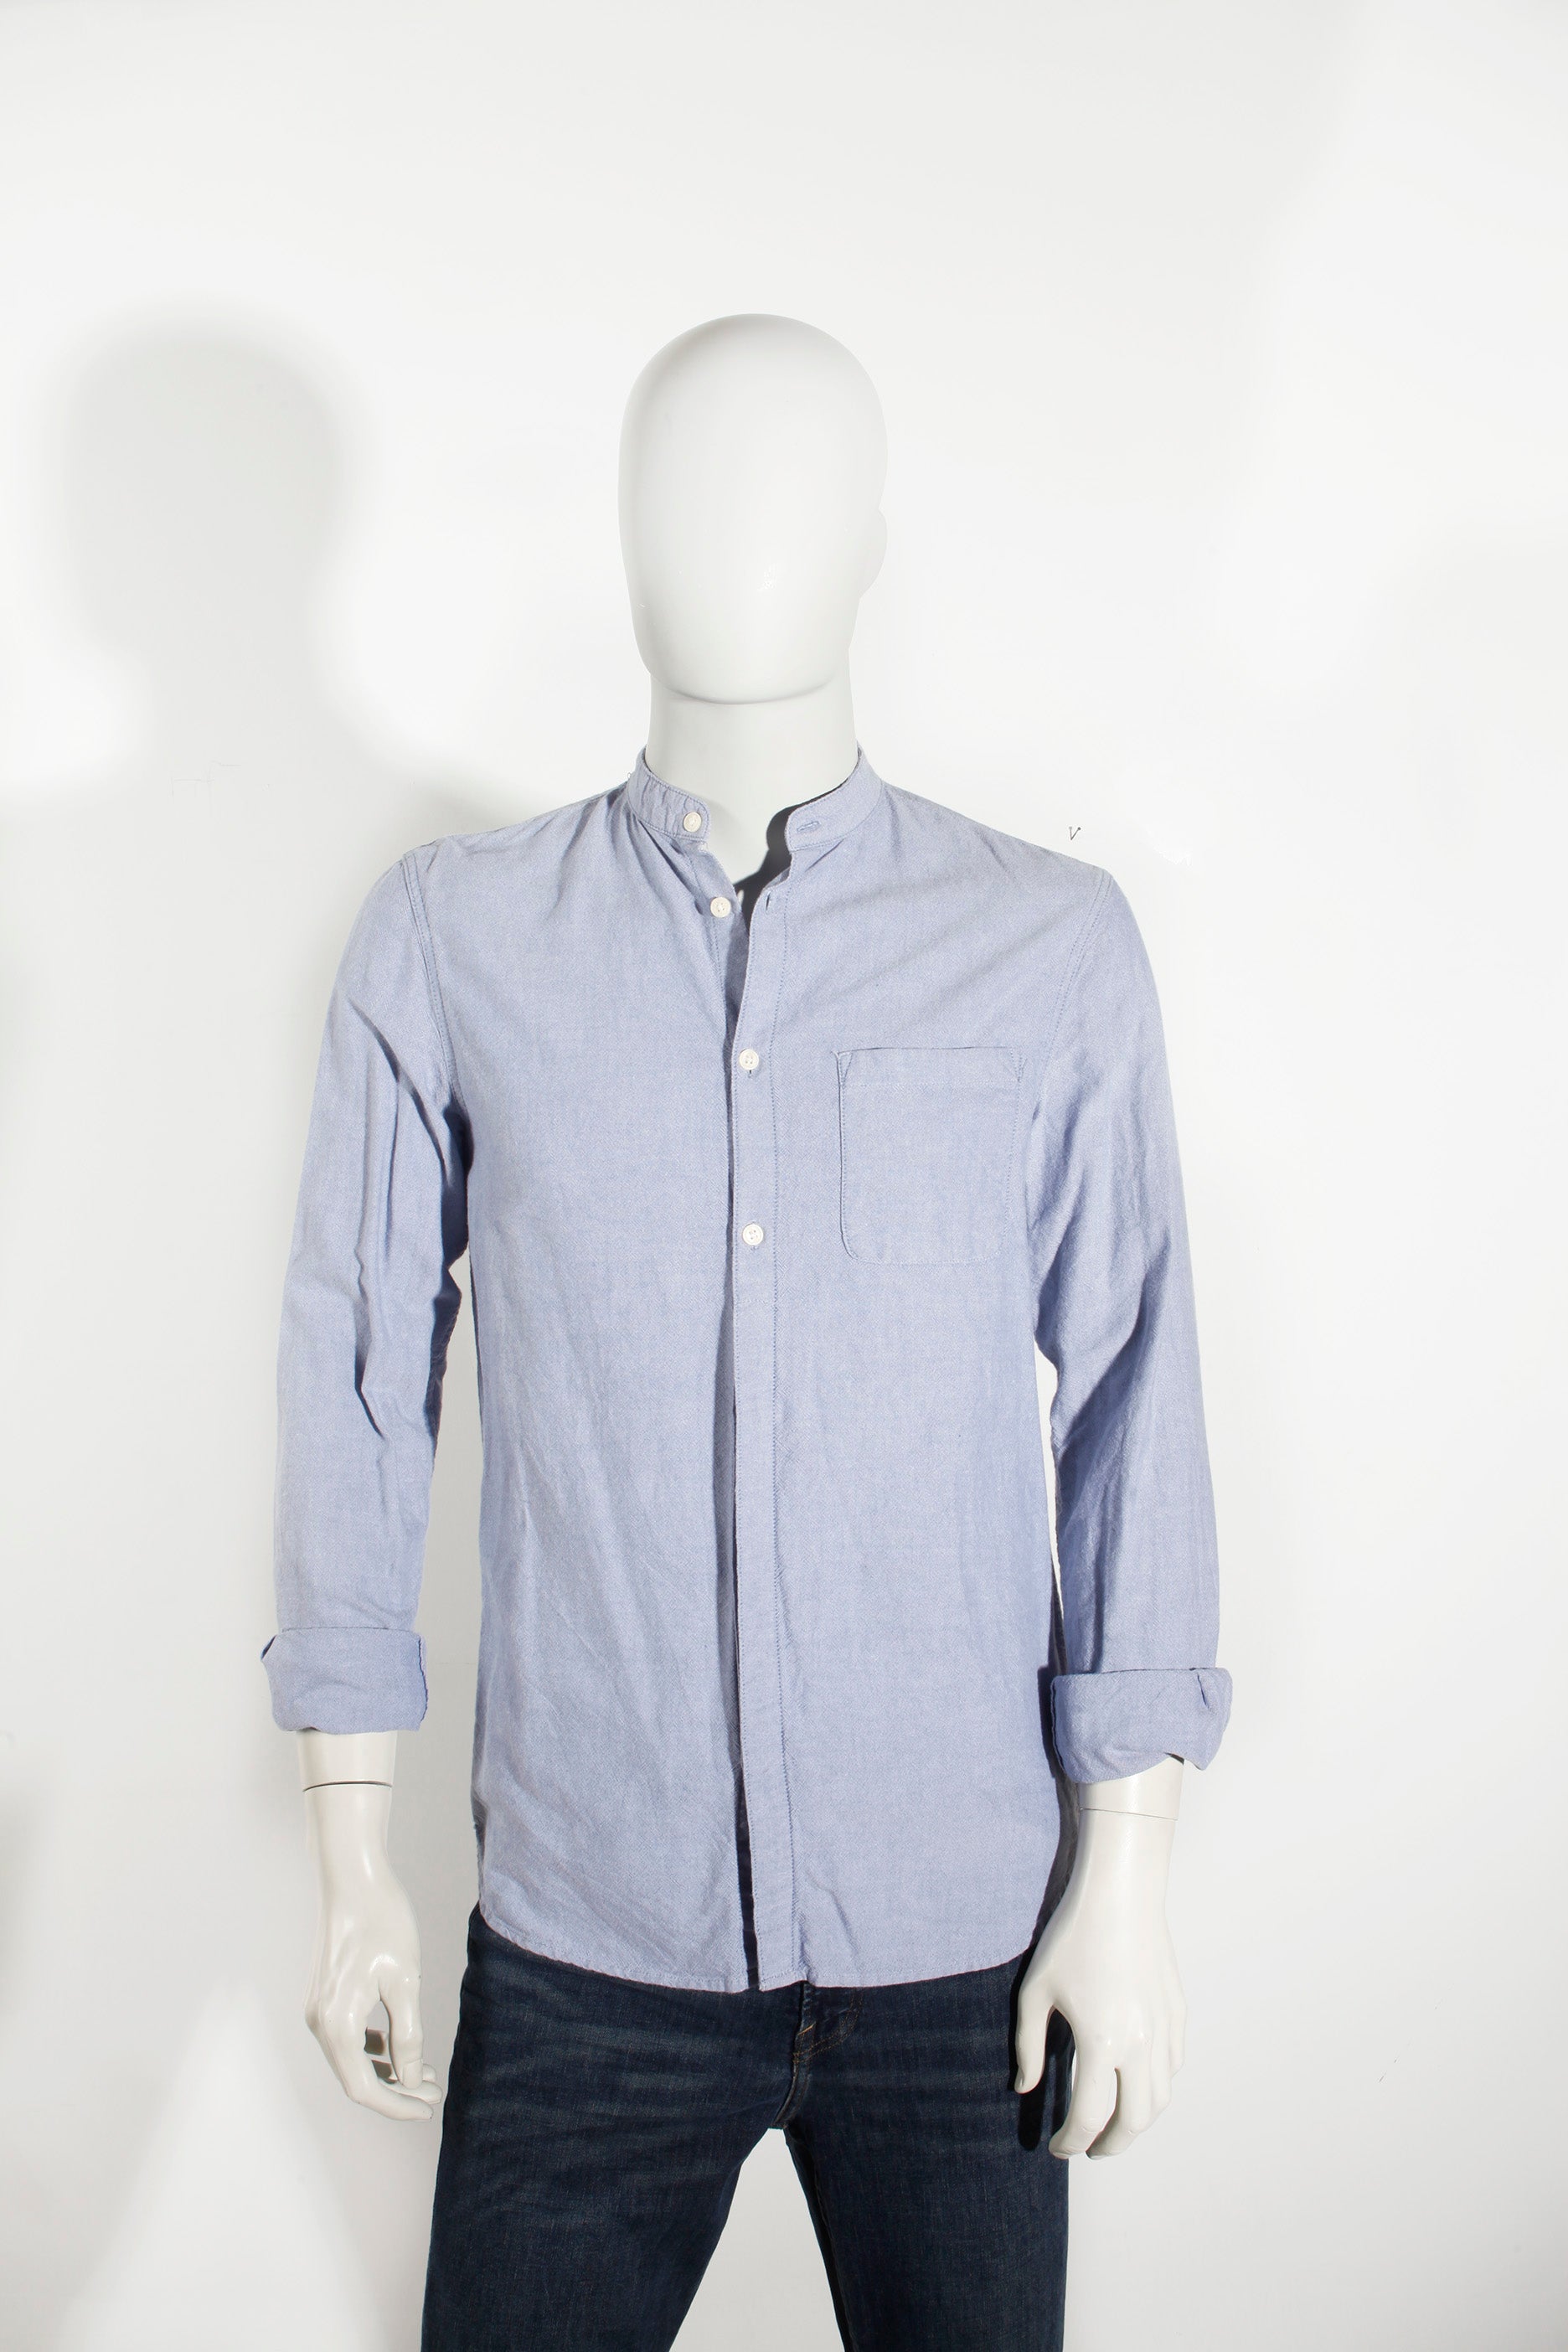 Mens Blue Shirt with Chinese Collar (Medium)